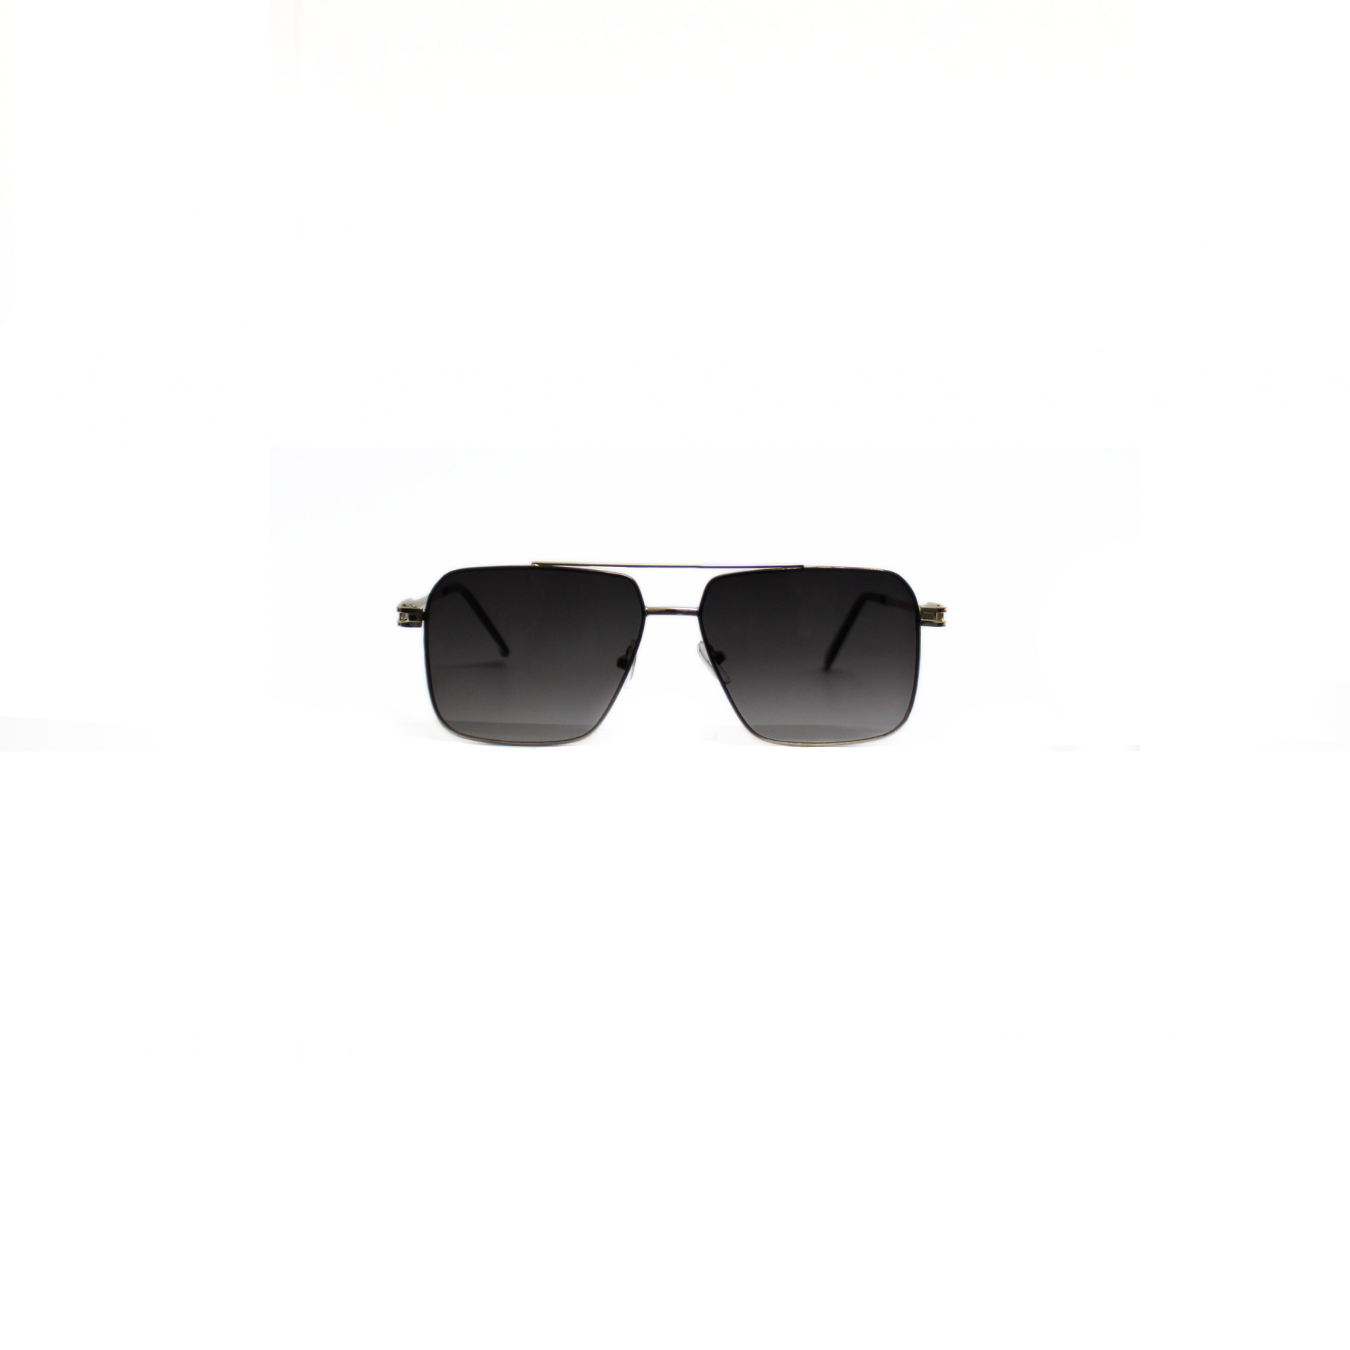 ARTHUR-II//005 I Sunglasses for Women - Specsview